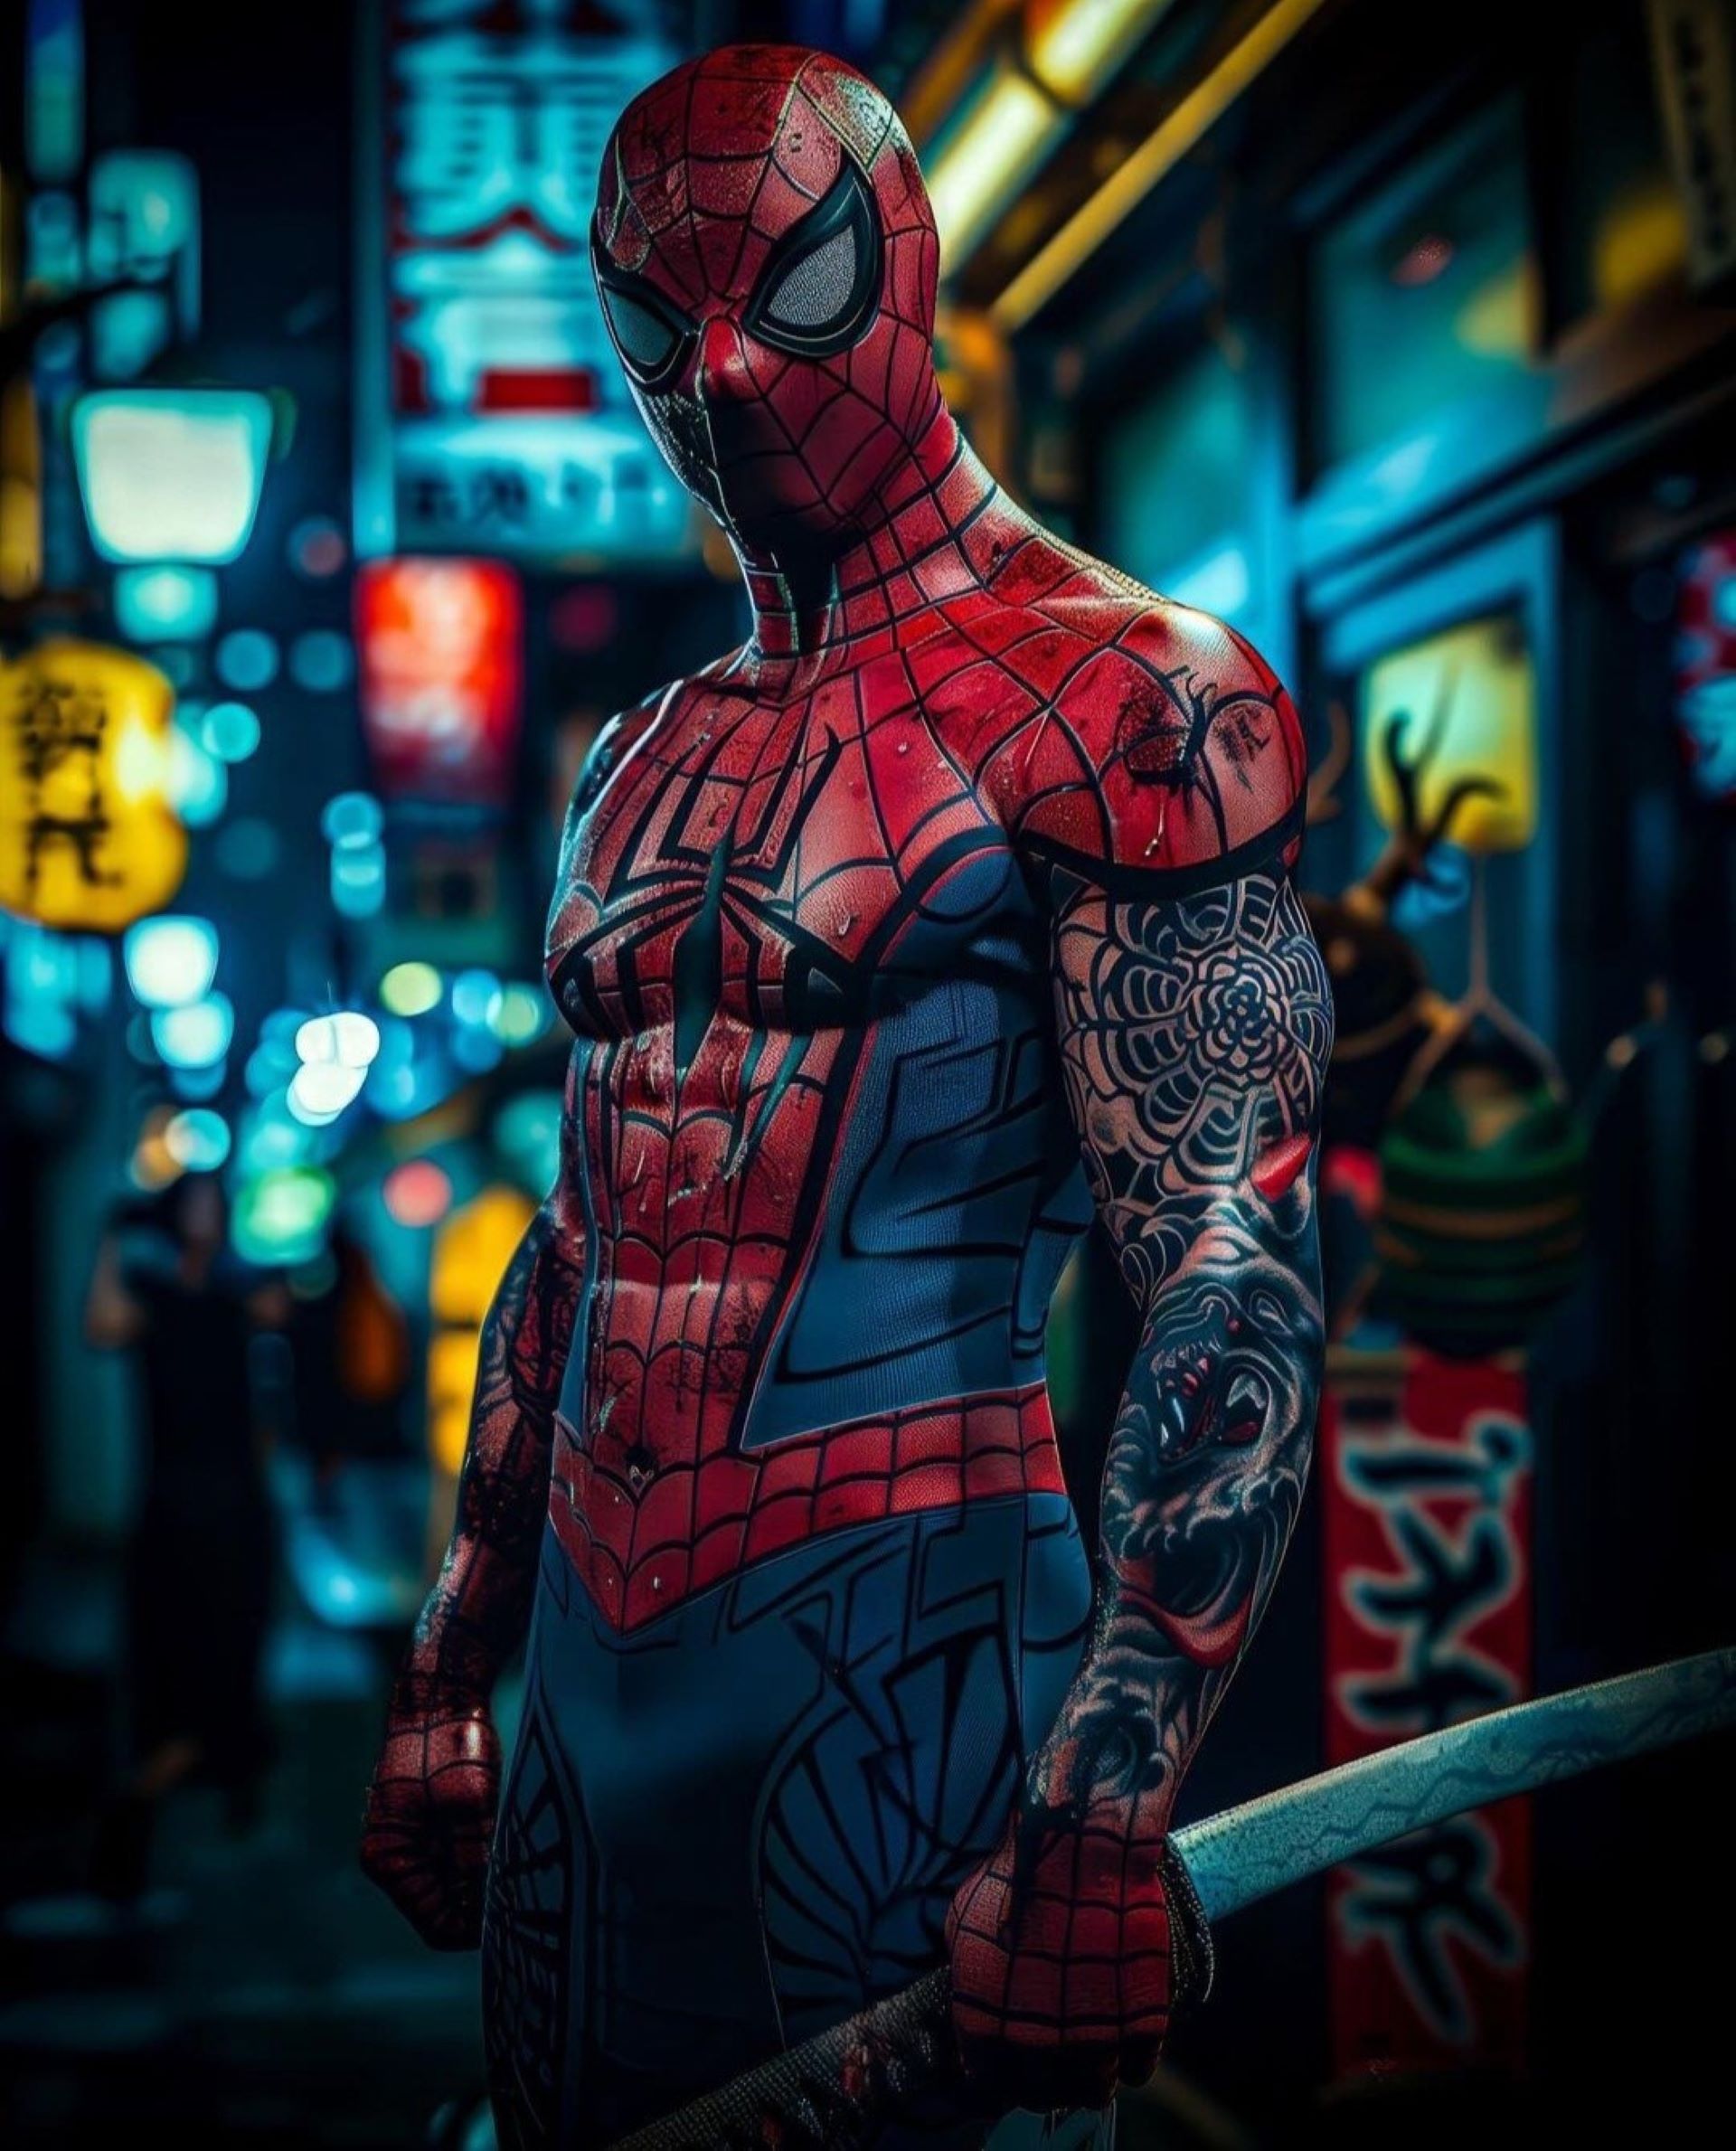 Spider-Man with a katana